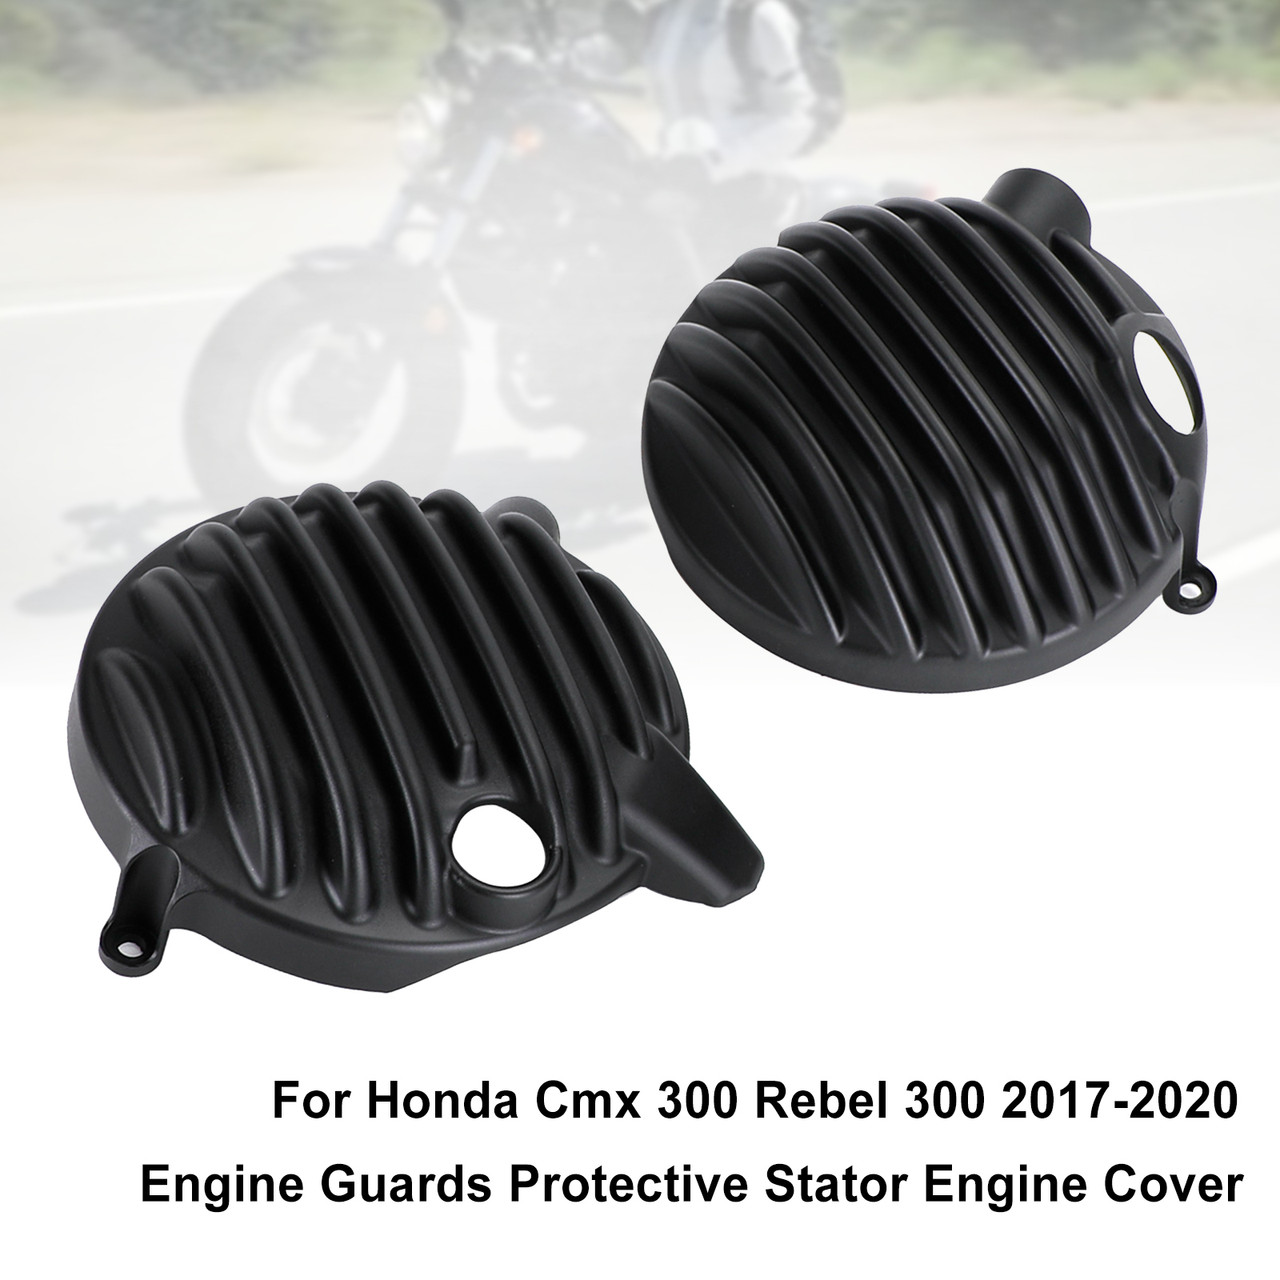 Engine Guards Protective Stator Engine Cover For Honda Cmx 300 Rebel 300 17-20